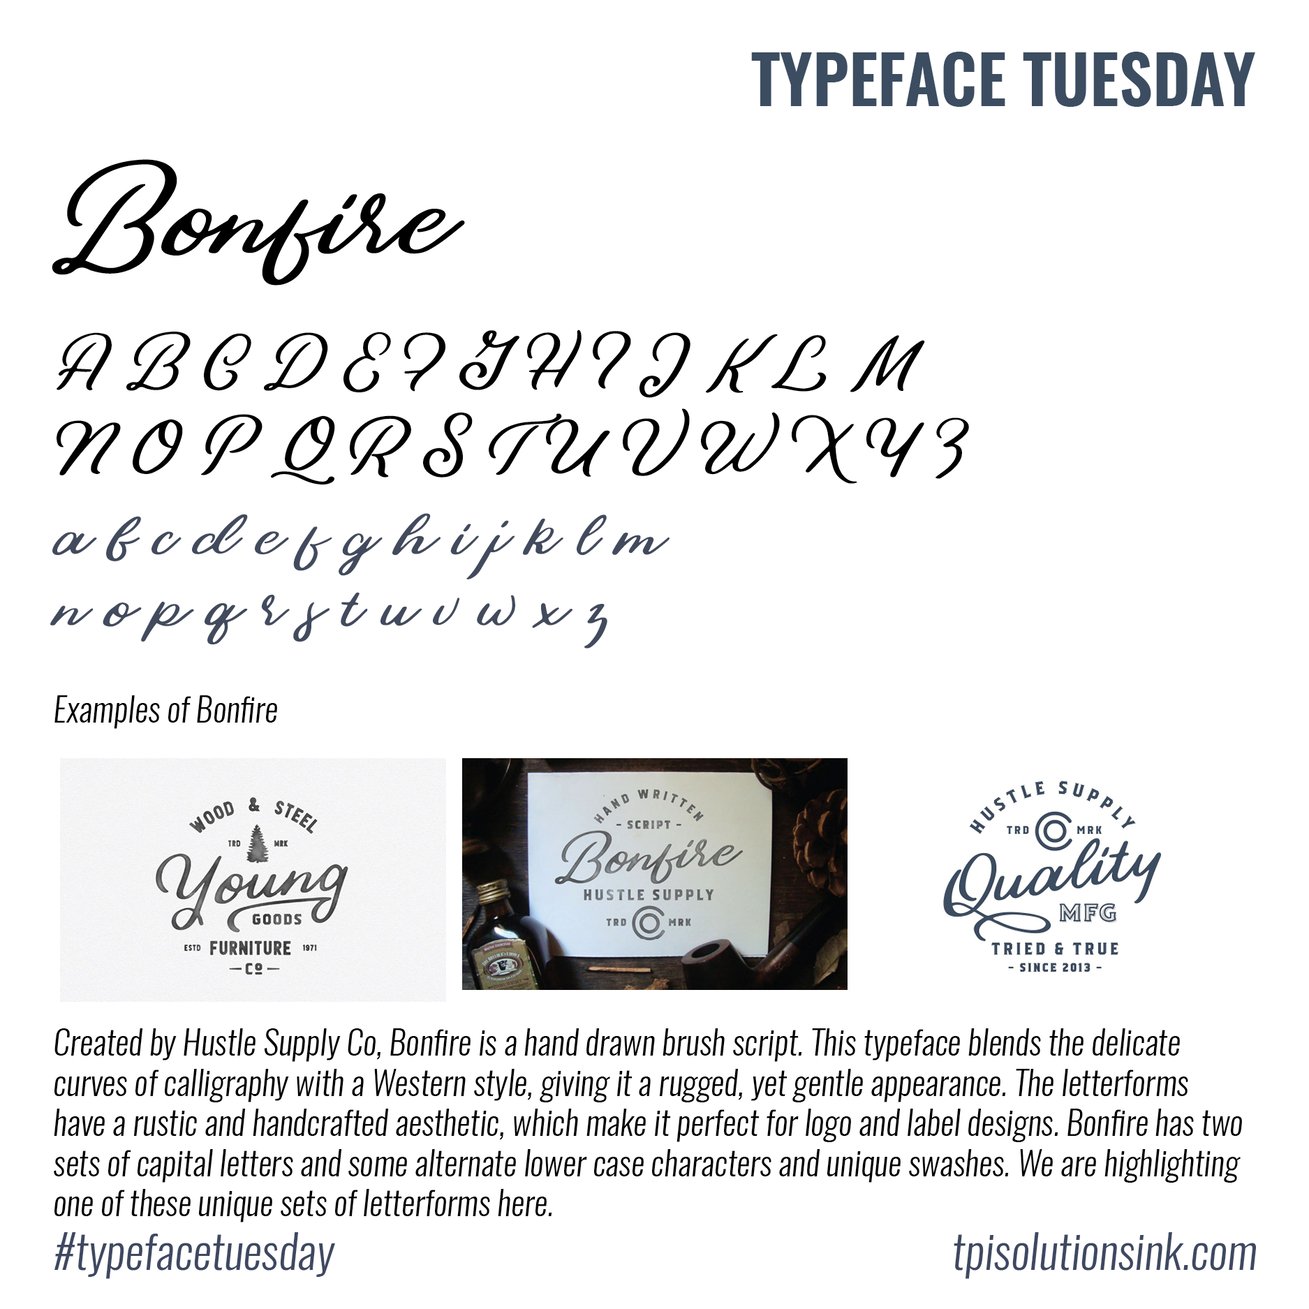 Typeface Tuesday – Bonfire